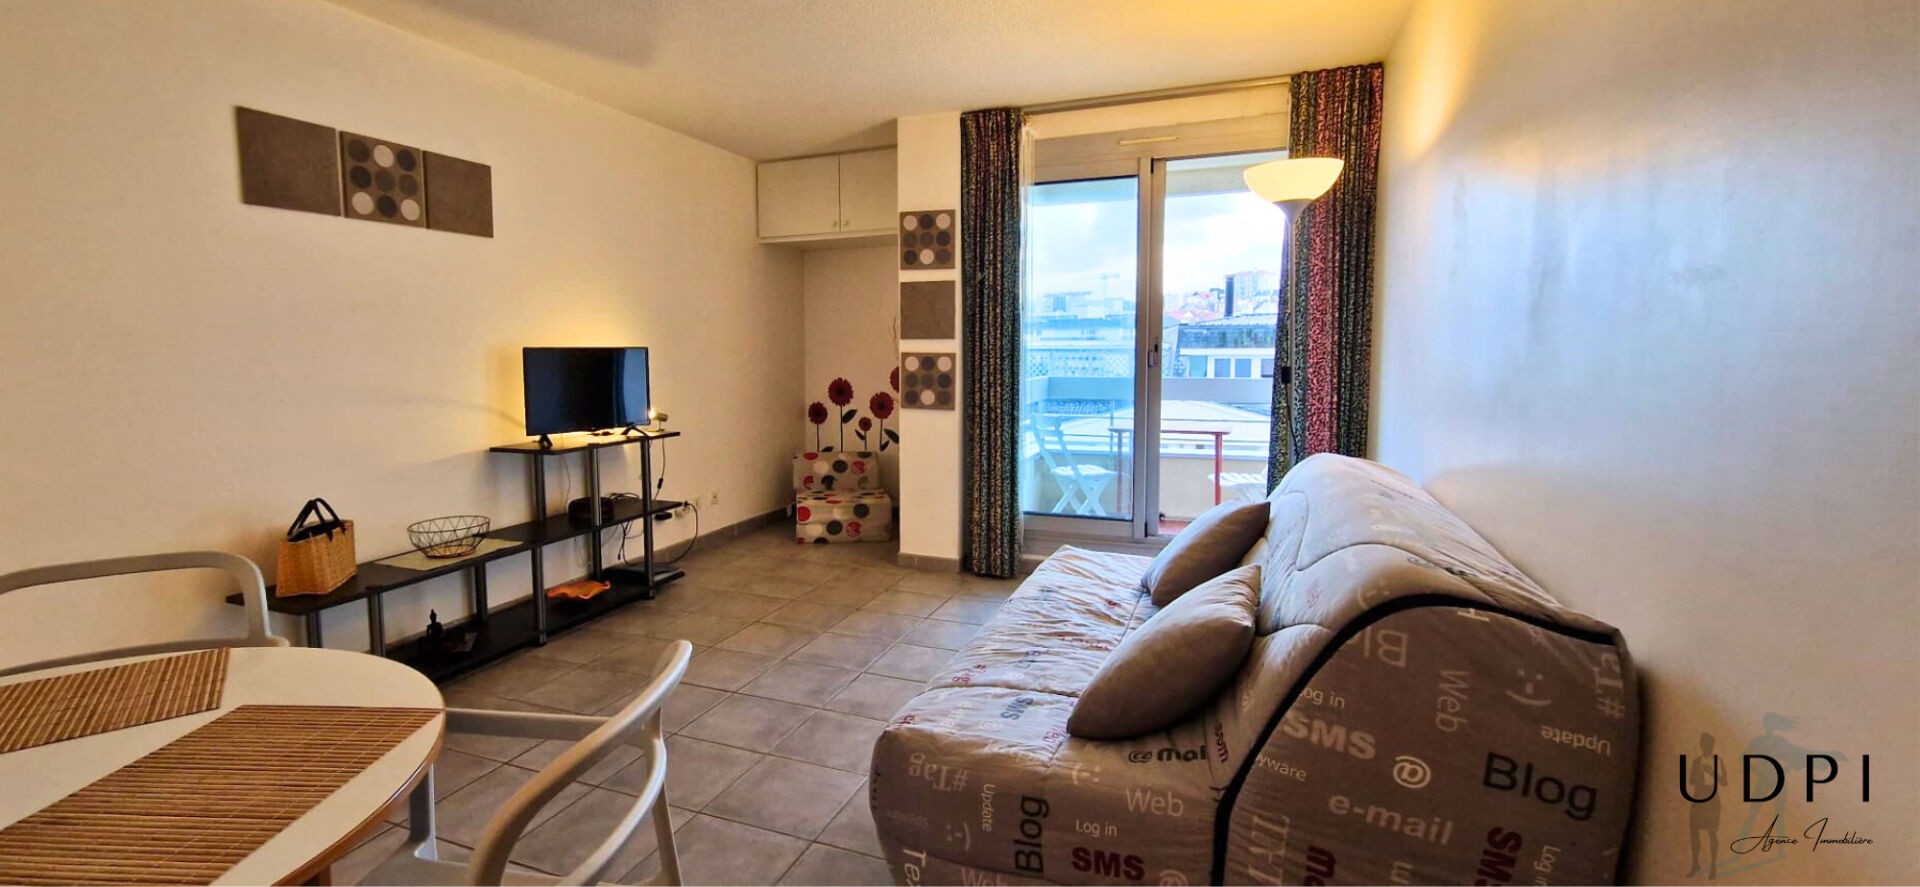 Vente Appartement à Biarritz 1 pièce